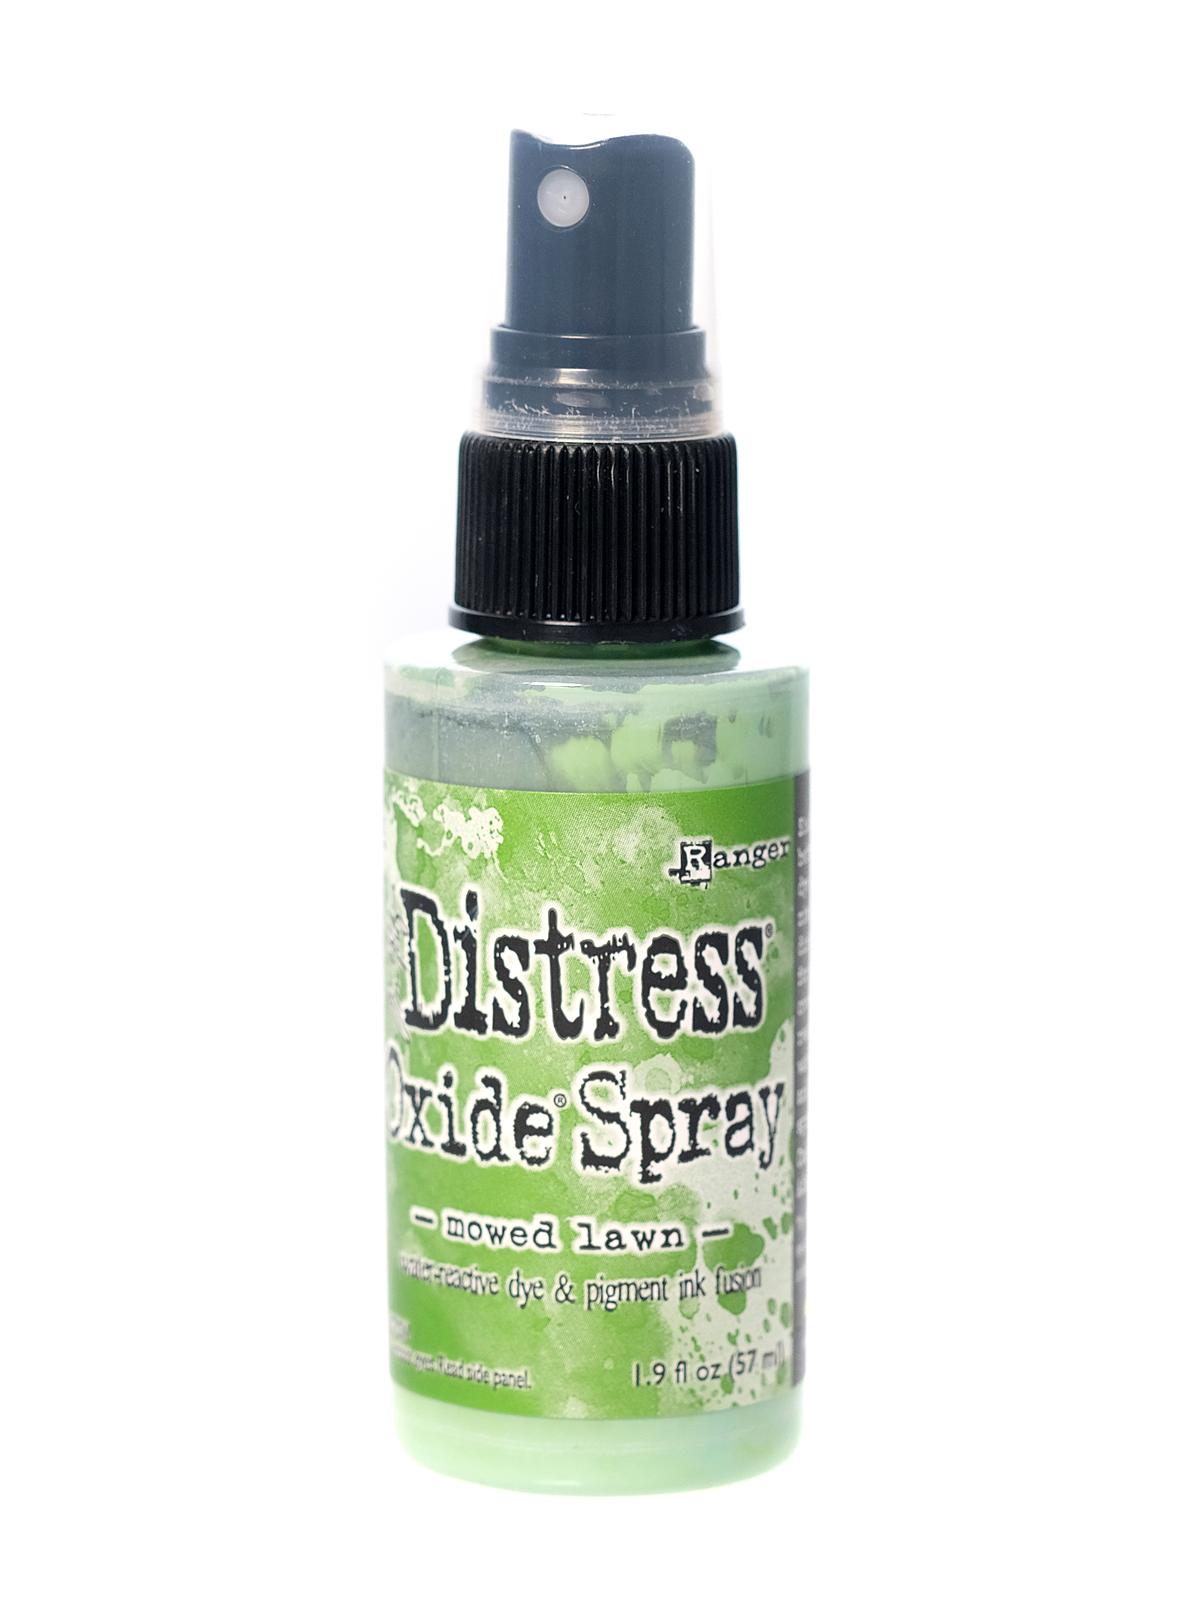 Tim Holtz Distress Oxide Sprays Mowed Lawn 2 Oz. Bottle